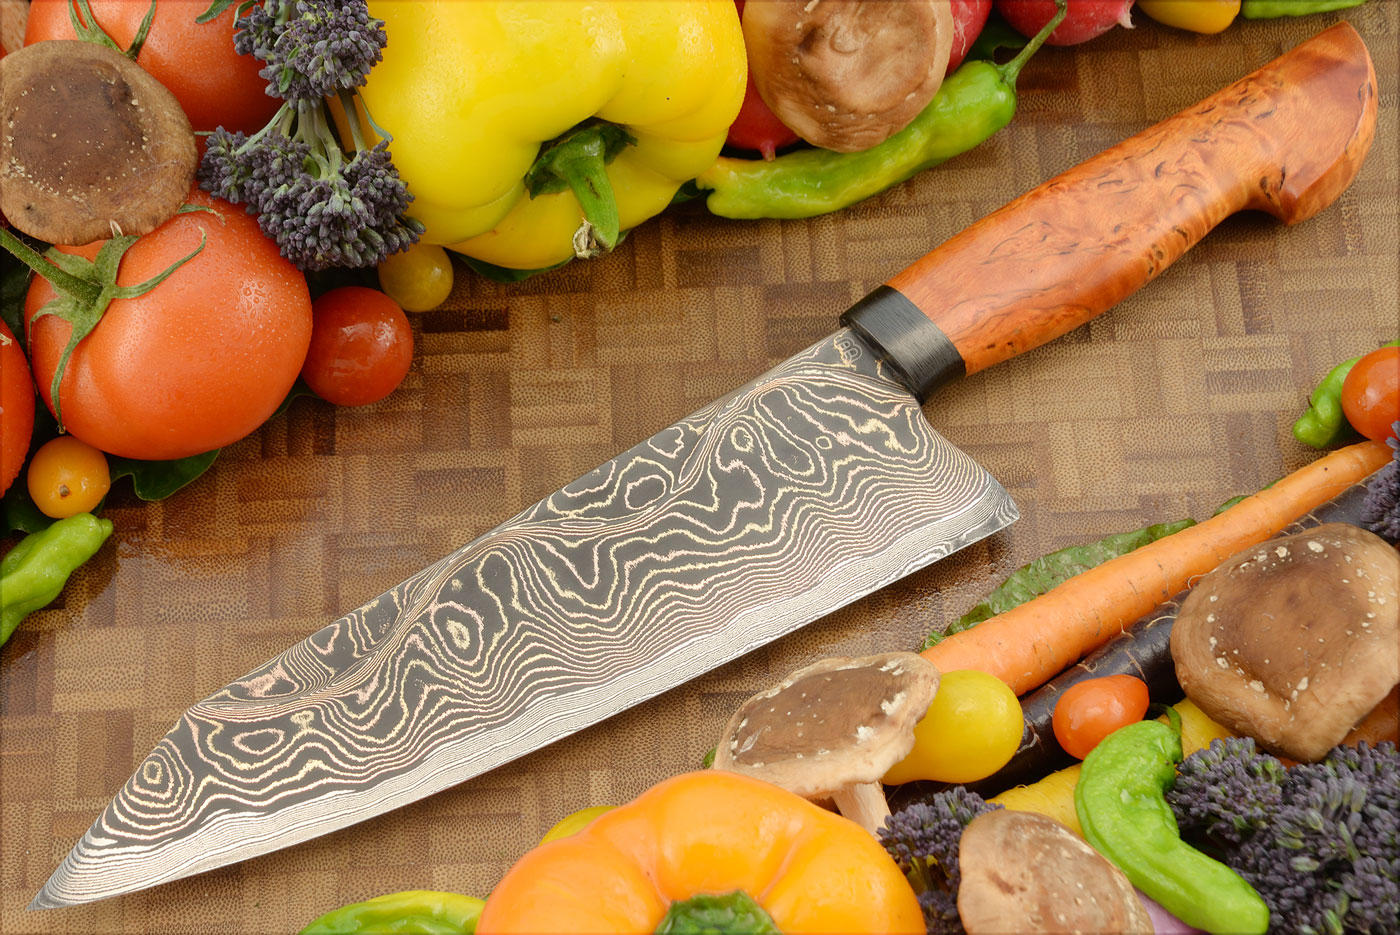 Wavy TigerMai Kiritsuke Chef's Knife (8-1/2 in.) with Masur Birch and Carbon Fiber